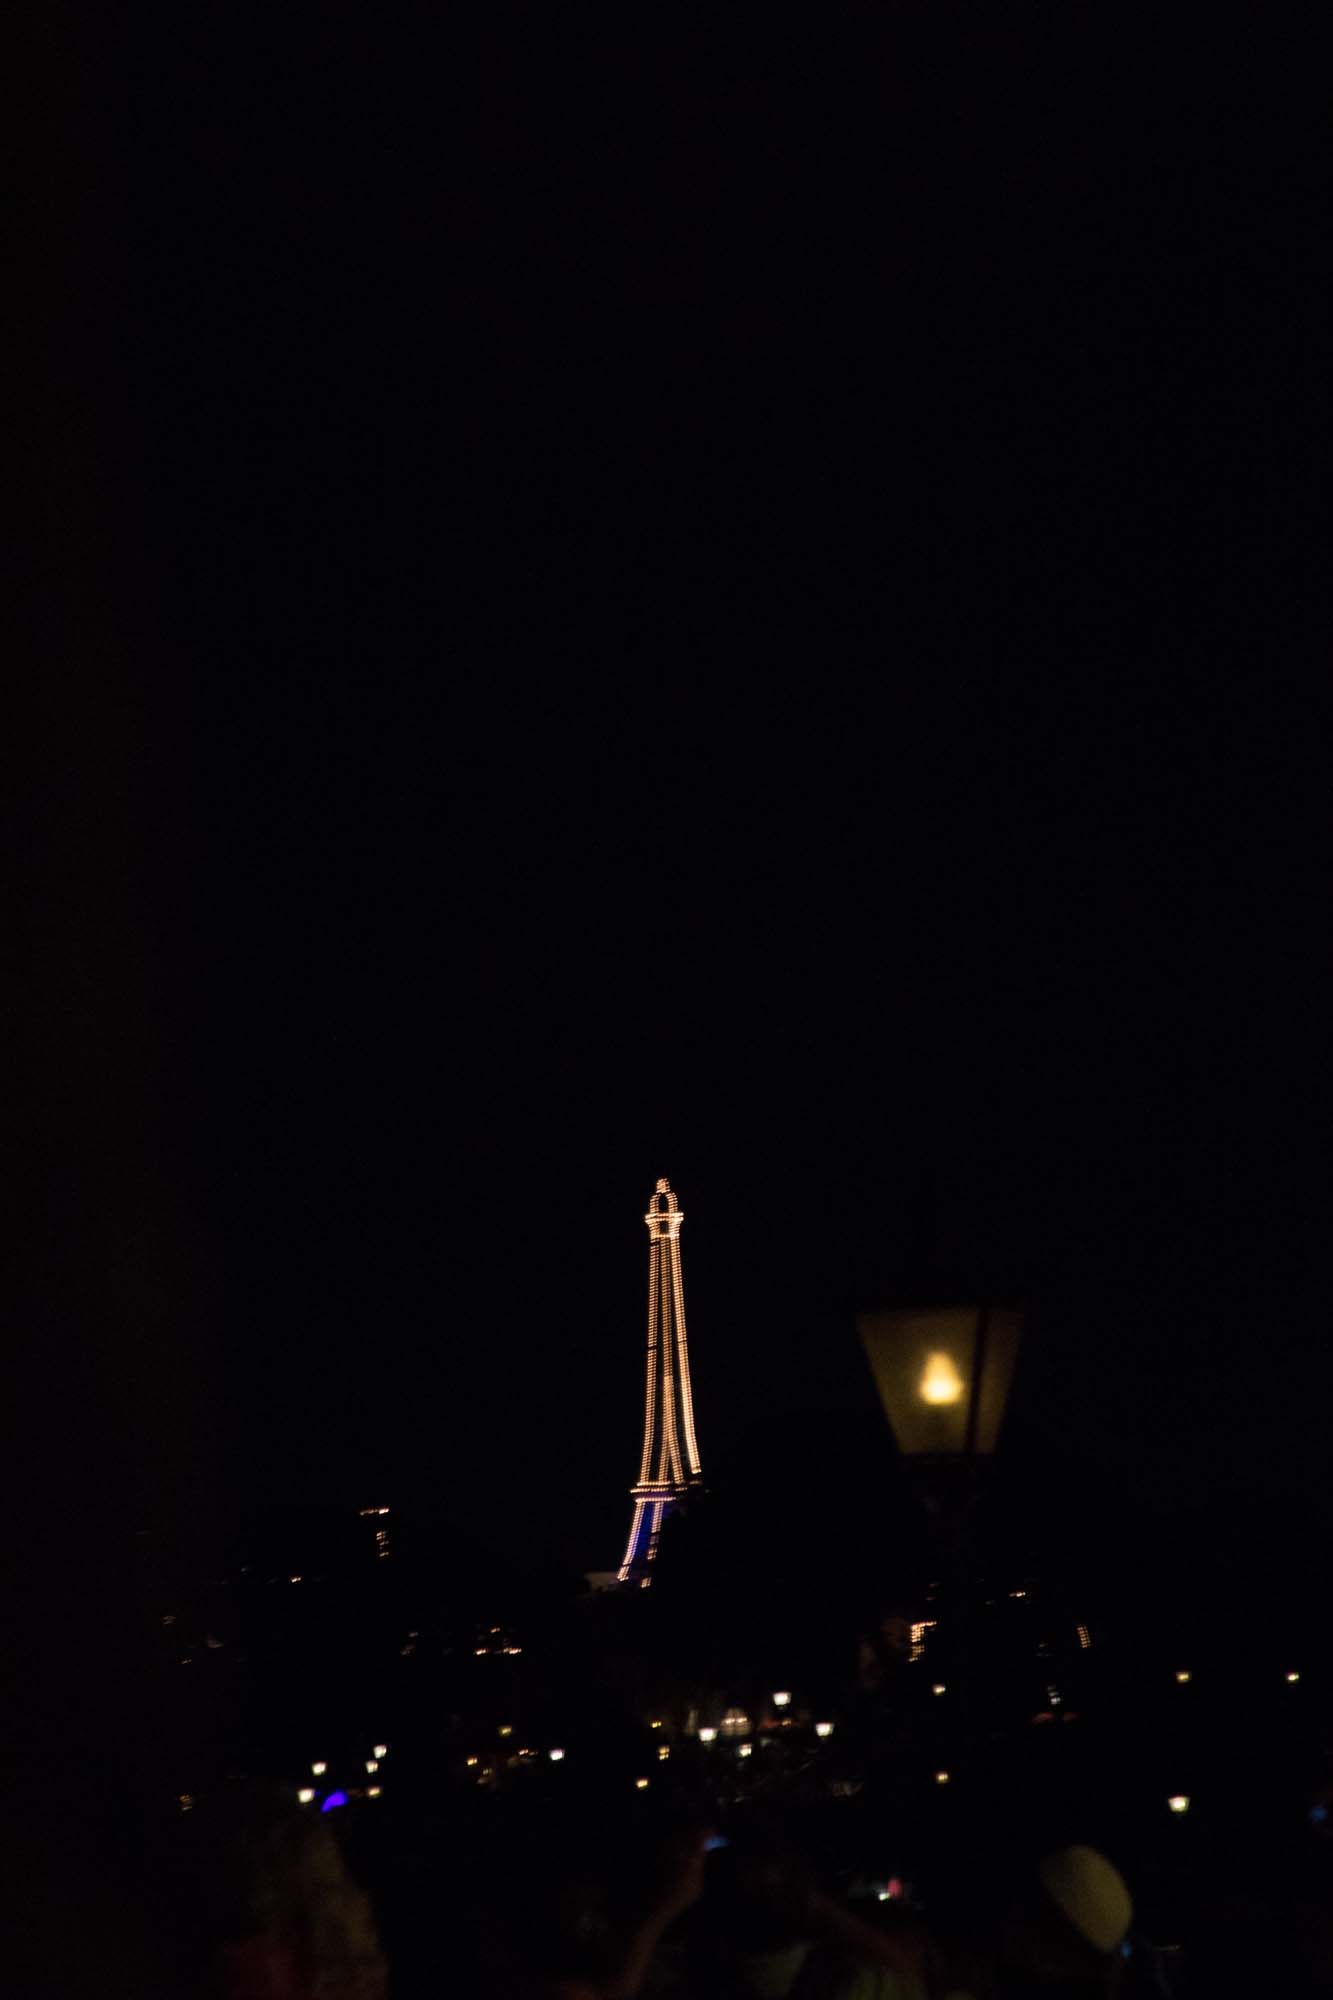 France - Lit Eiffel Tower at Night